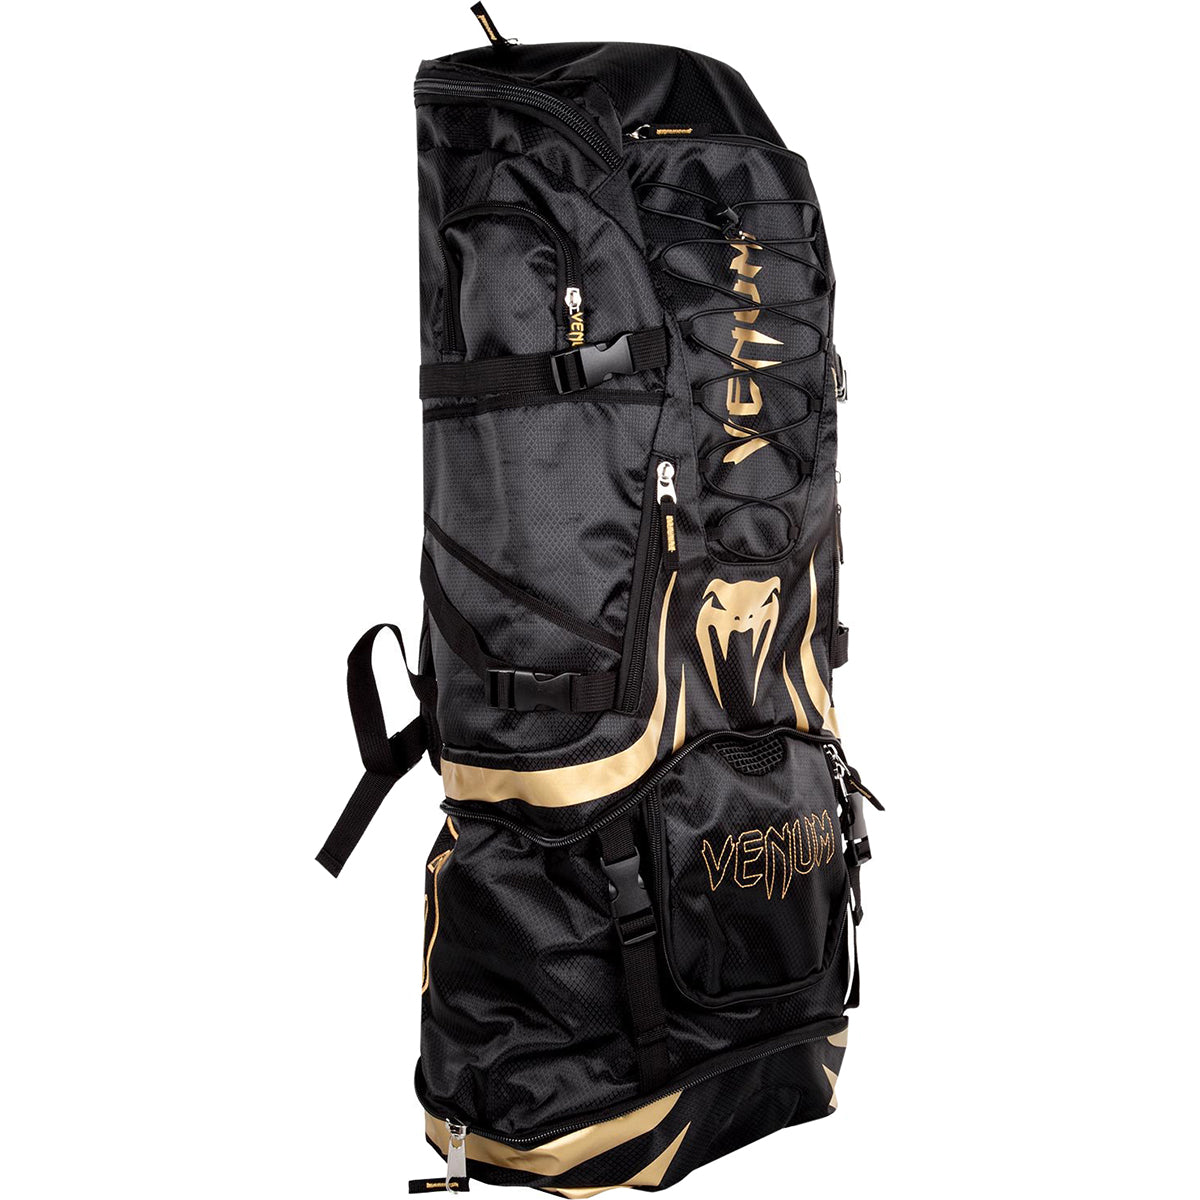 Venum Challenger Xtreme Backpack - Black/Gold Venum